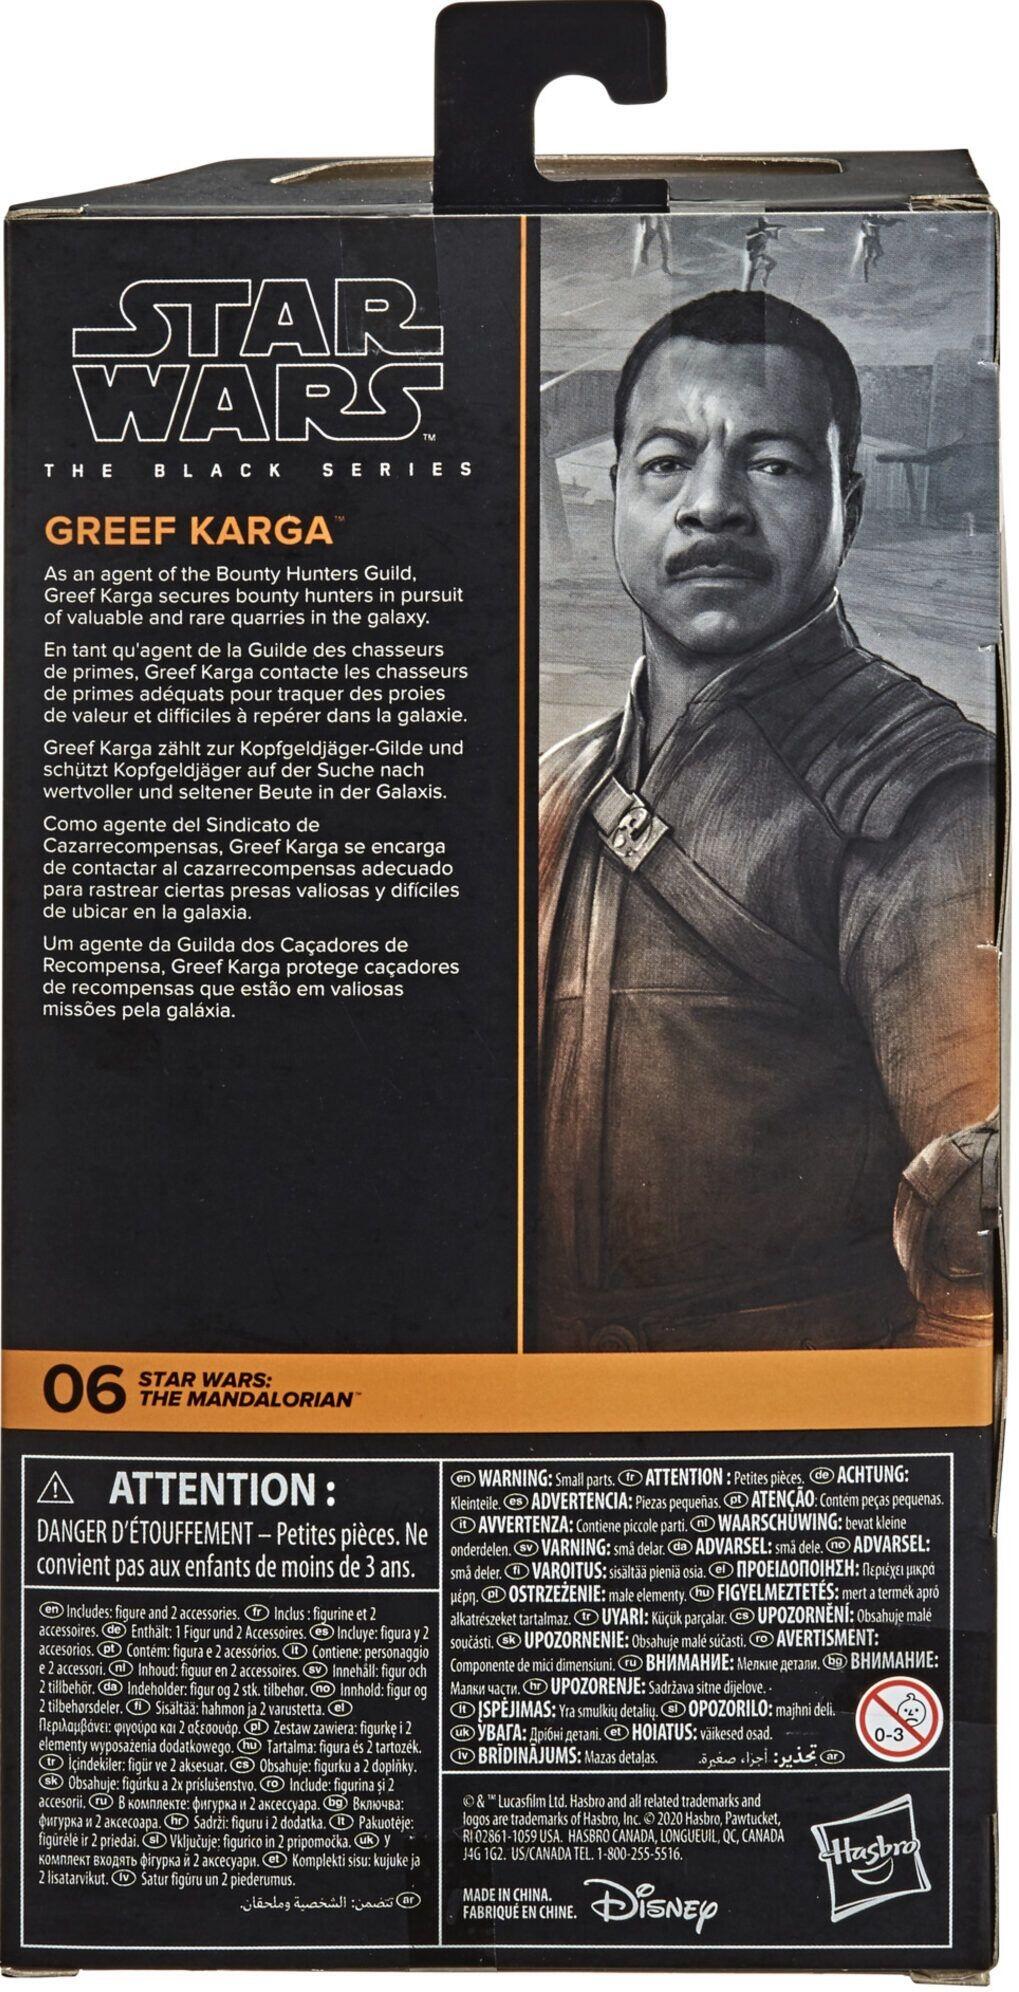 Star Wars The Black Series - Greef Karga - The Mandalorian